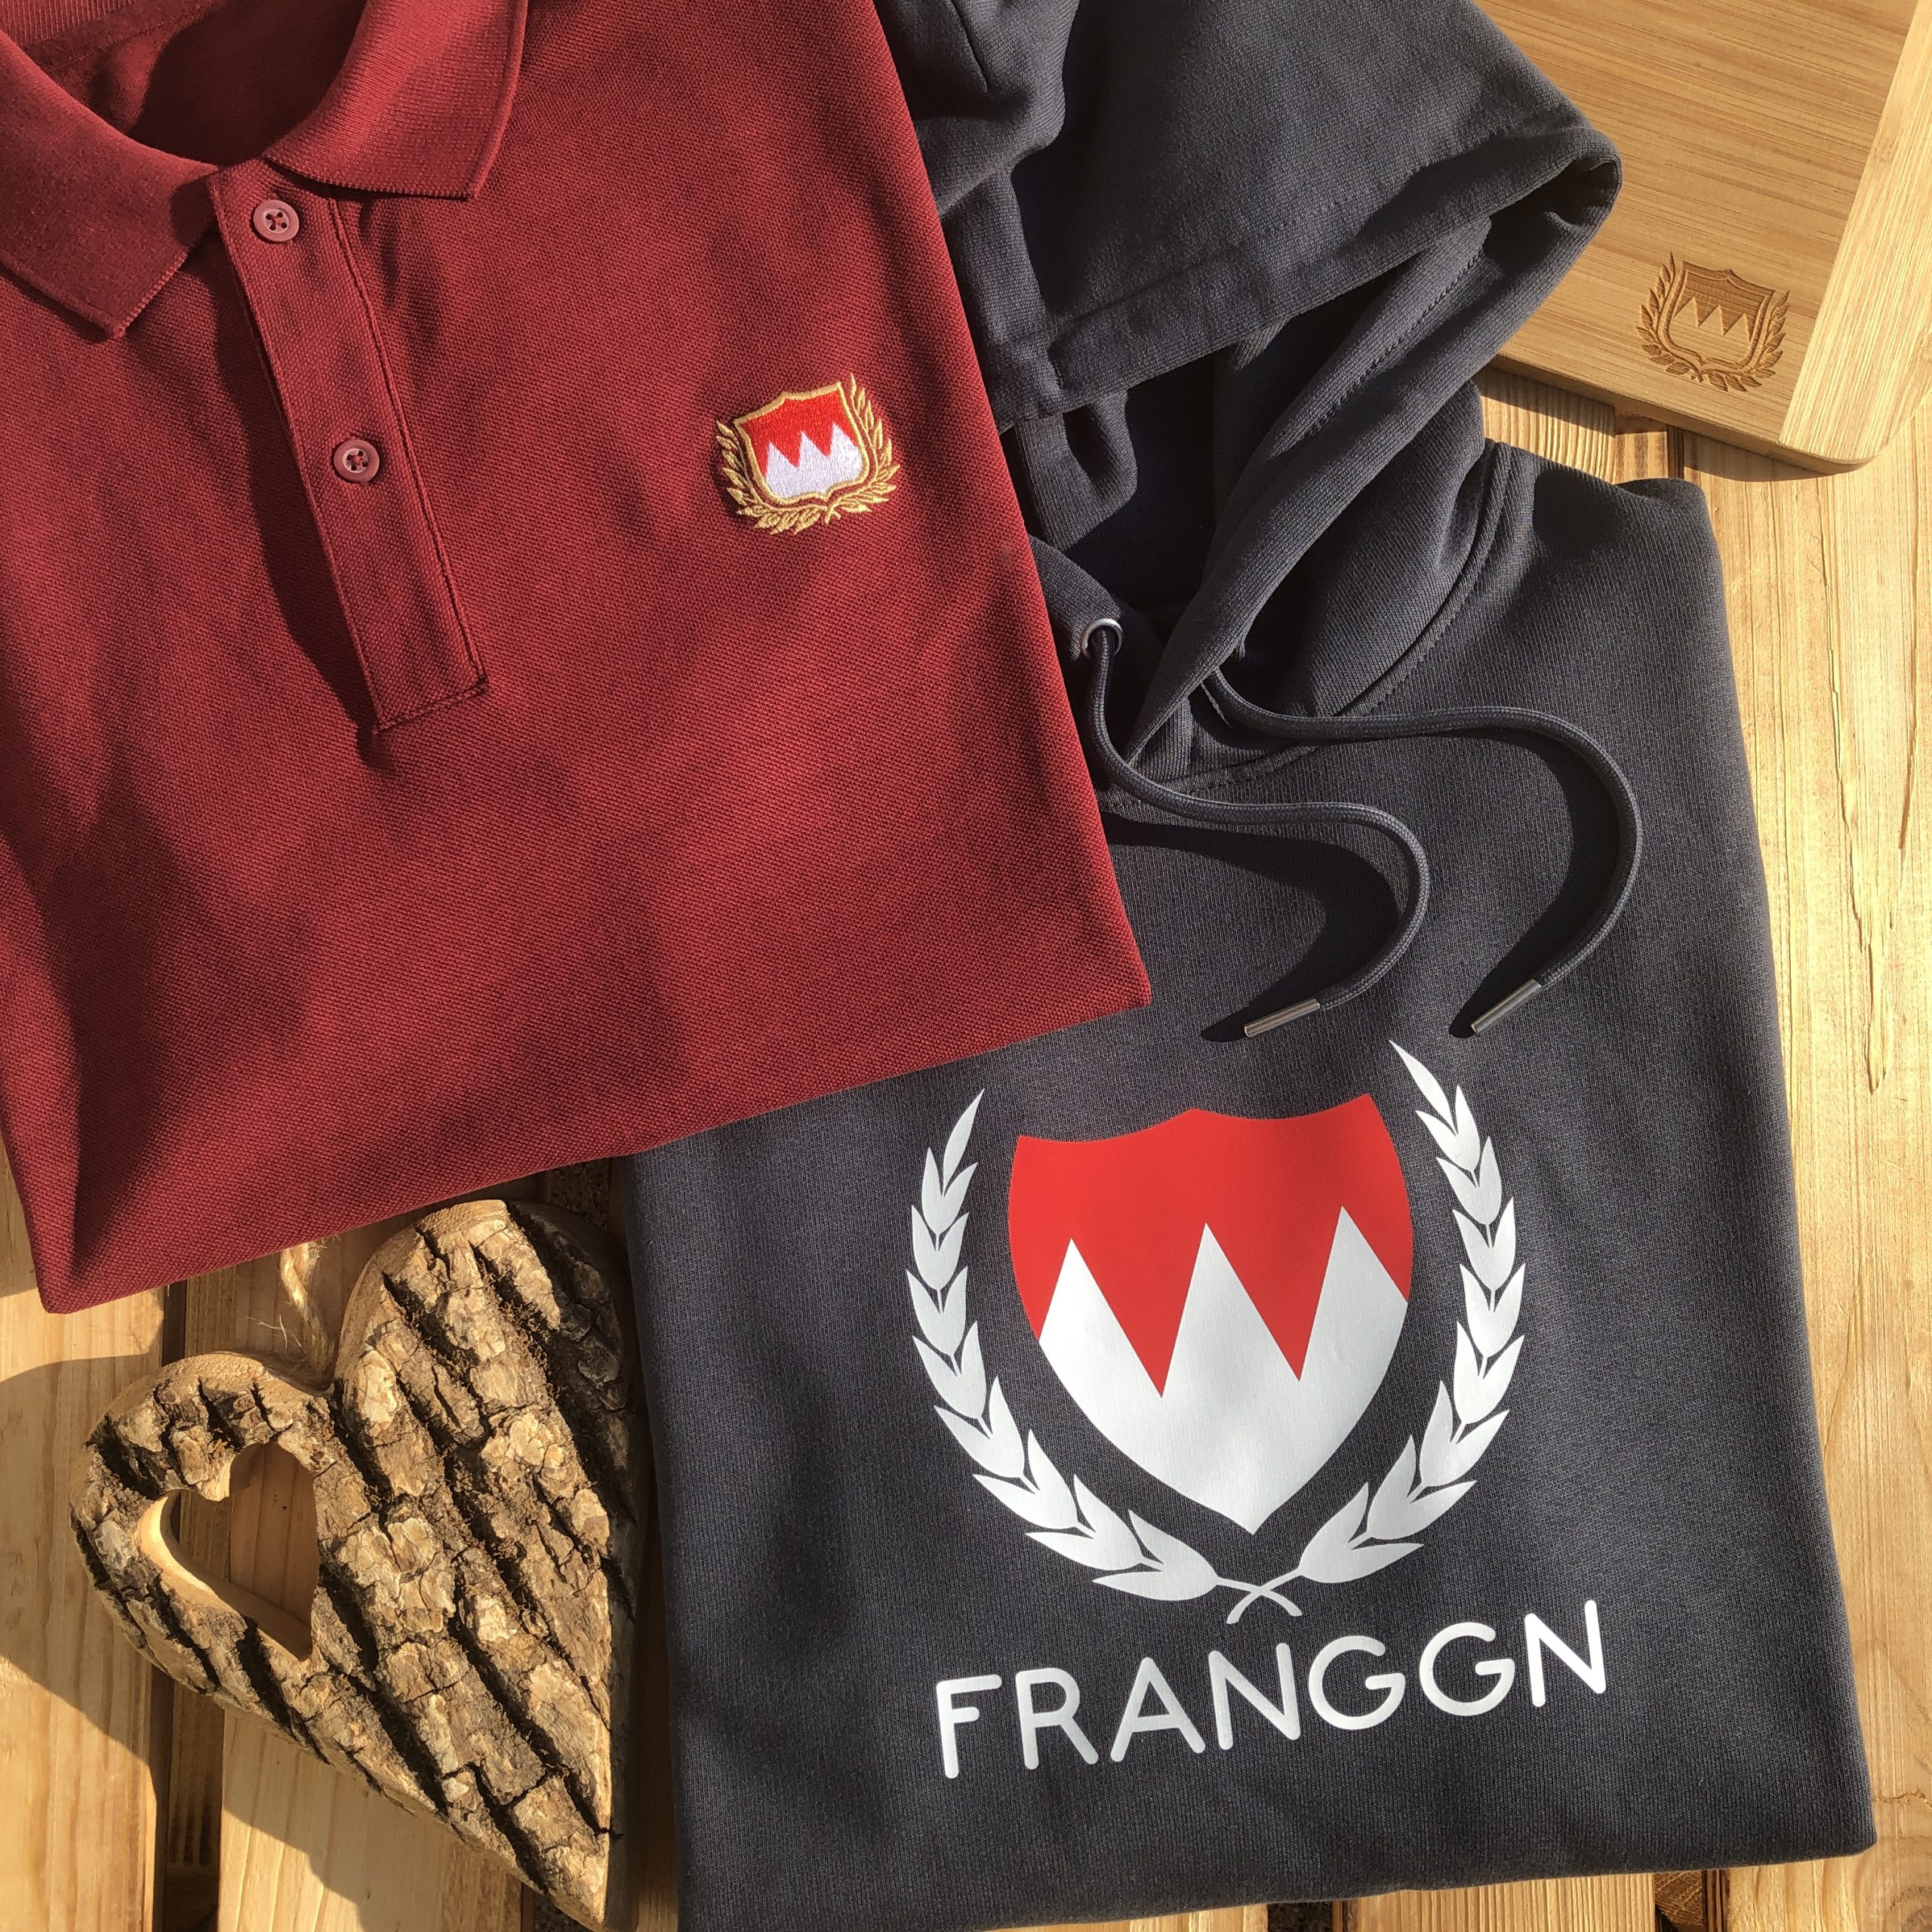 Franggn Hoodie mit Franken Wappen Frankenstyle Shop Coburg